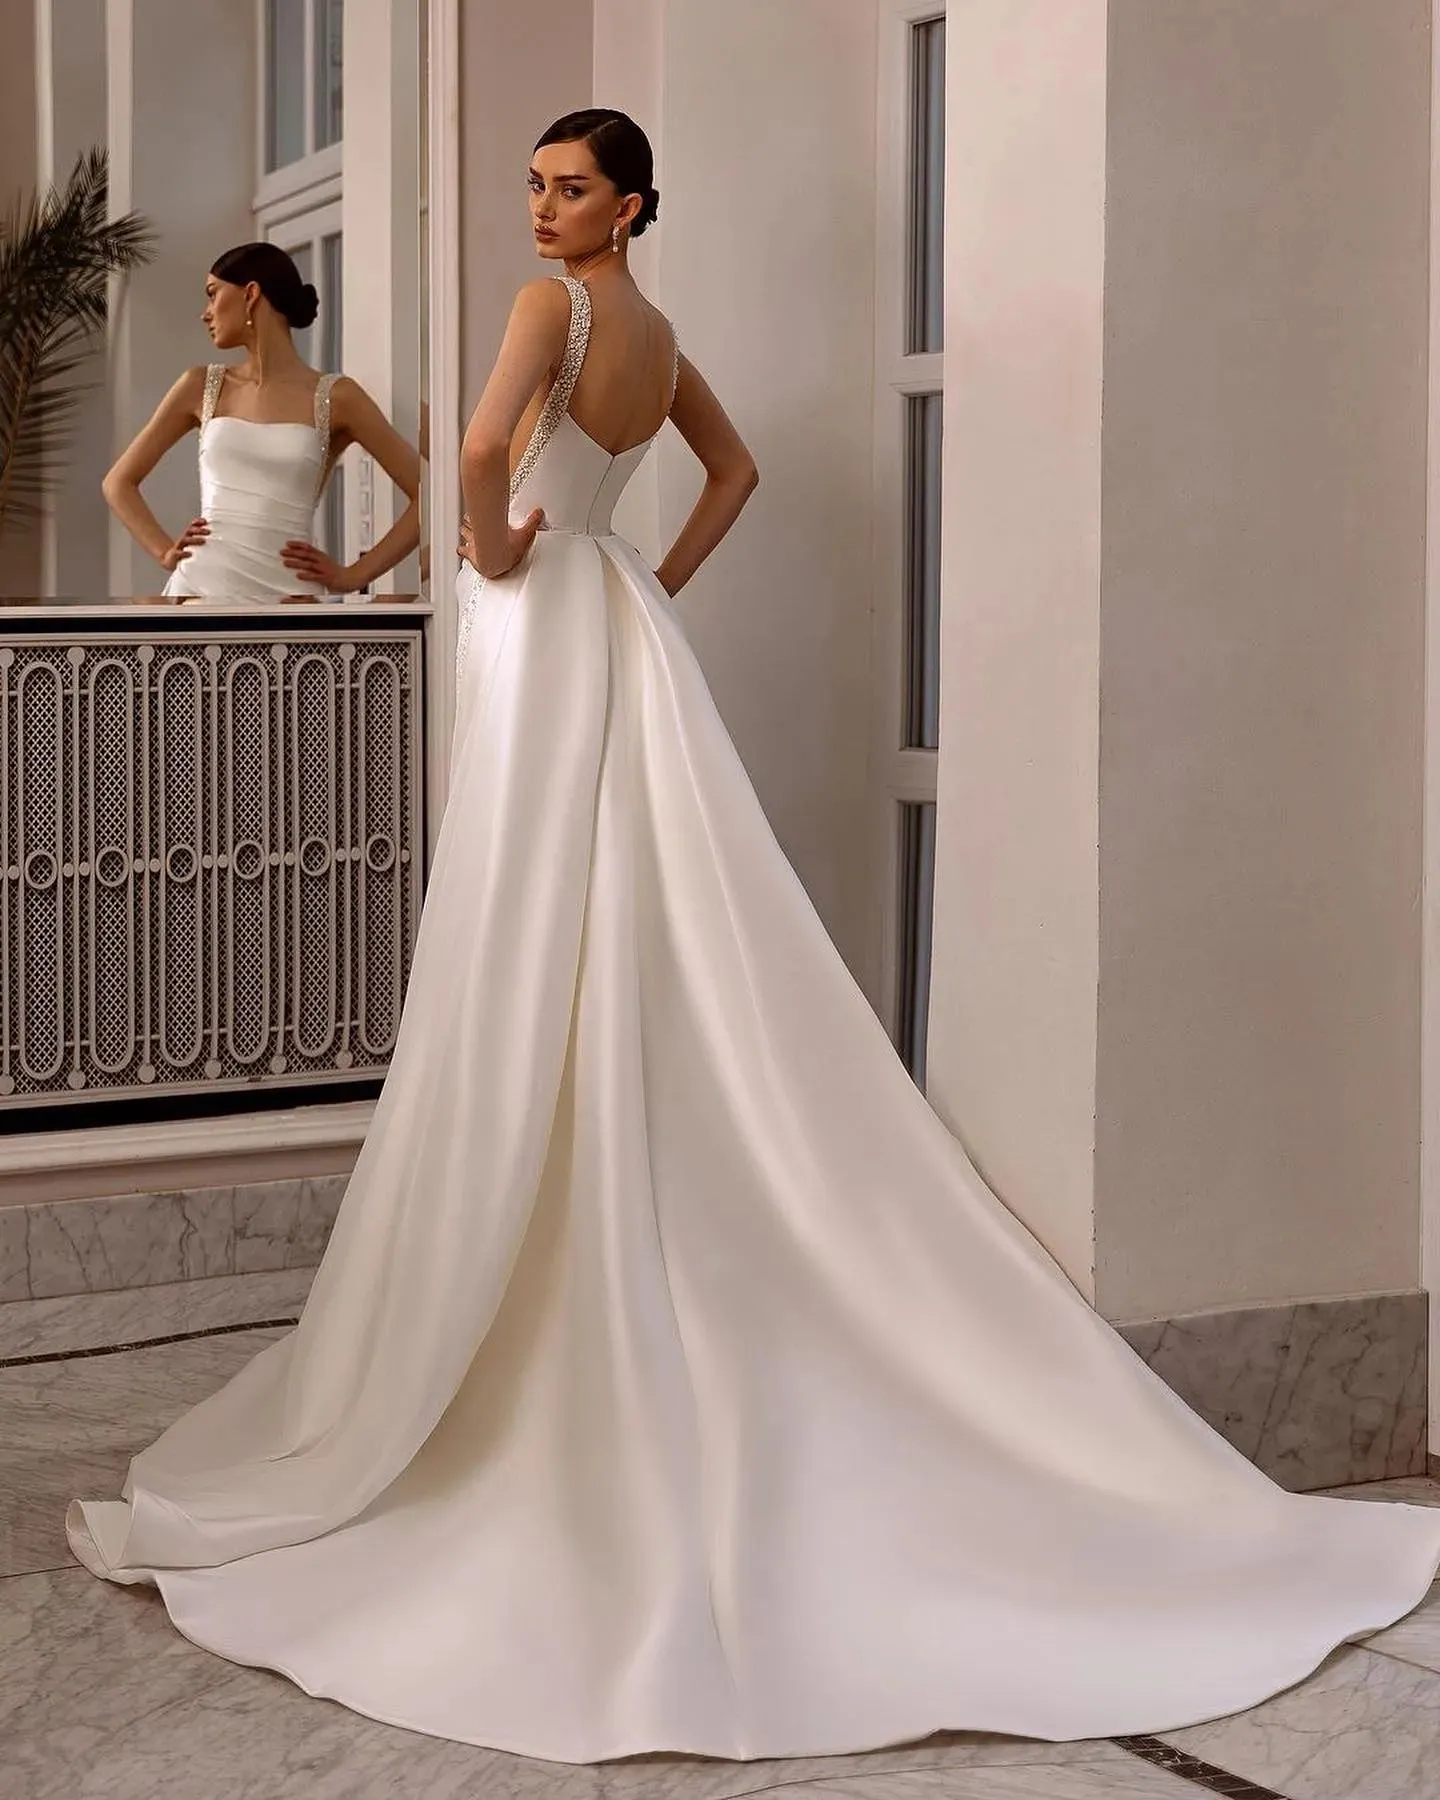 Glamorous Mermaid Wedding Dresses Overskirts Pearls Beads Straps Satin Wedding Dress Sweep Train robe de mariee bridal gowns